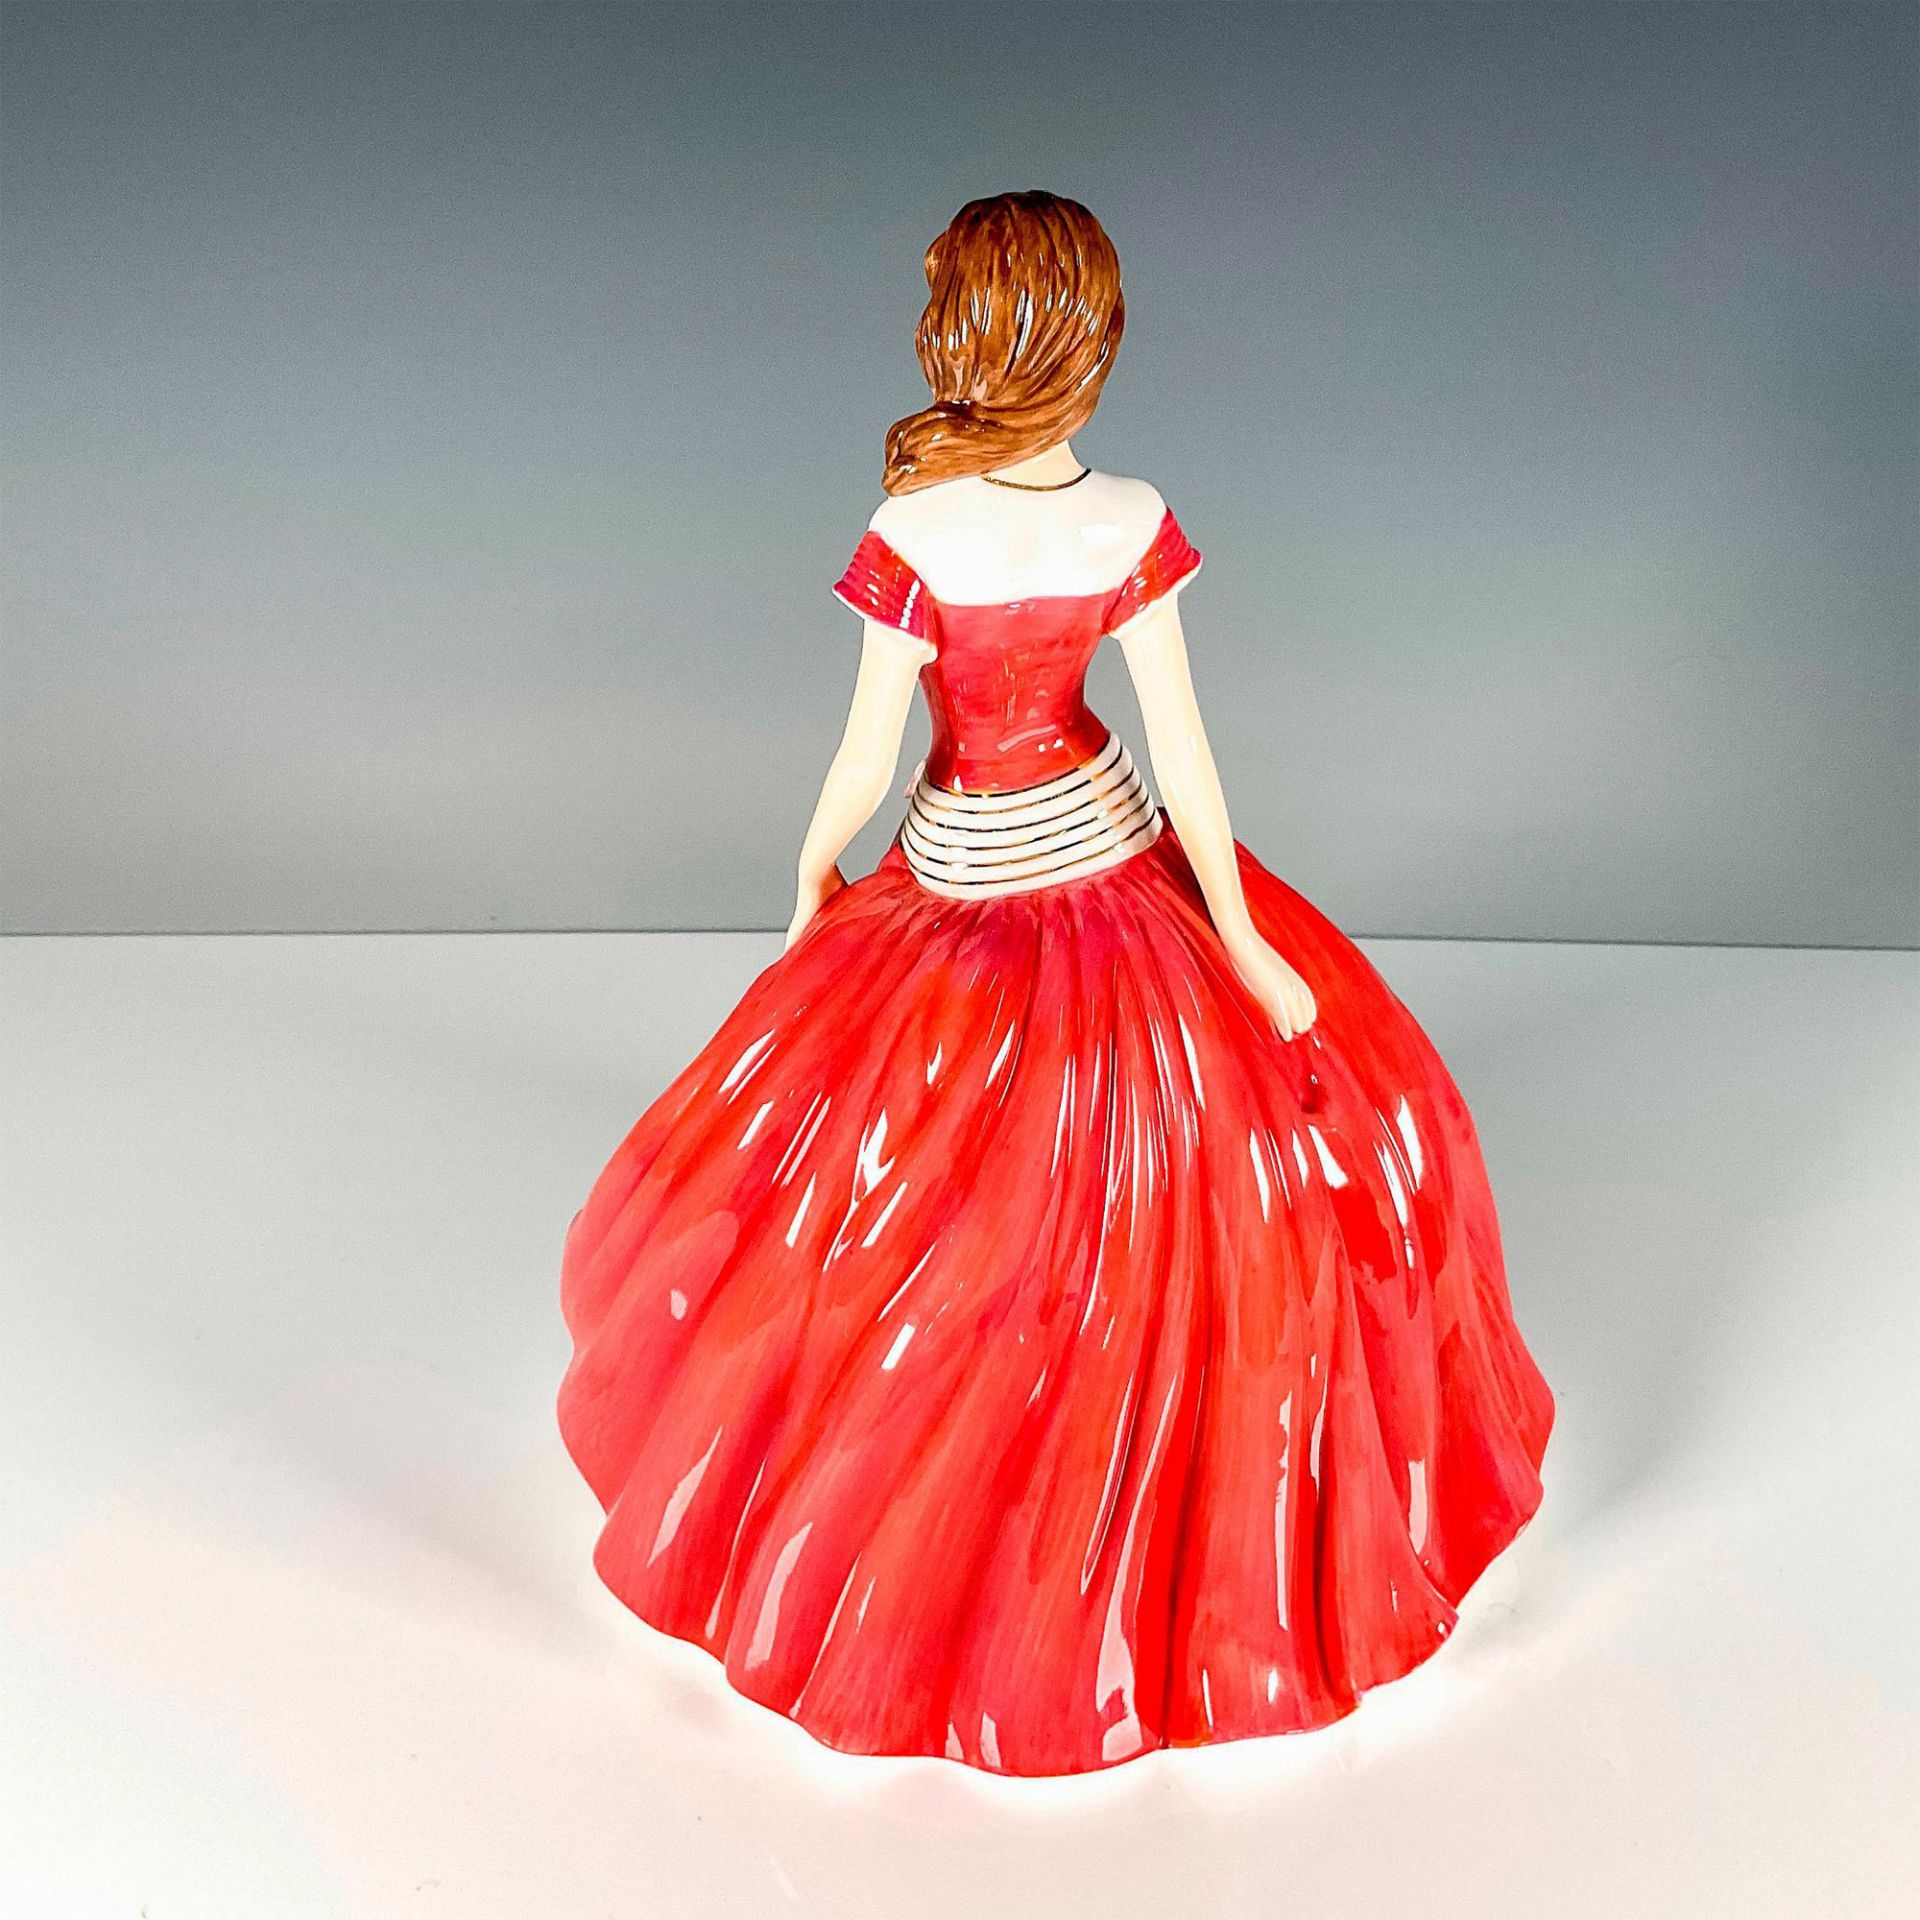 English Rose - HN5029 - Royal Doulton Figurine - Image 2 of 3